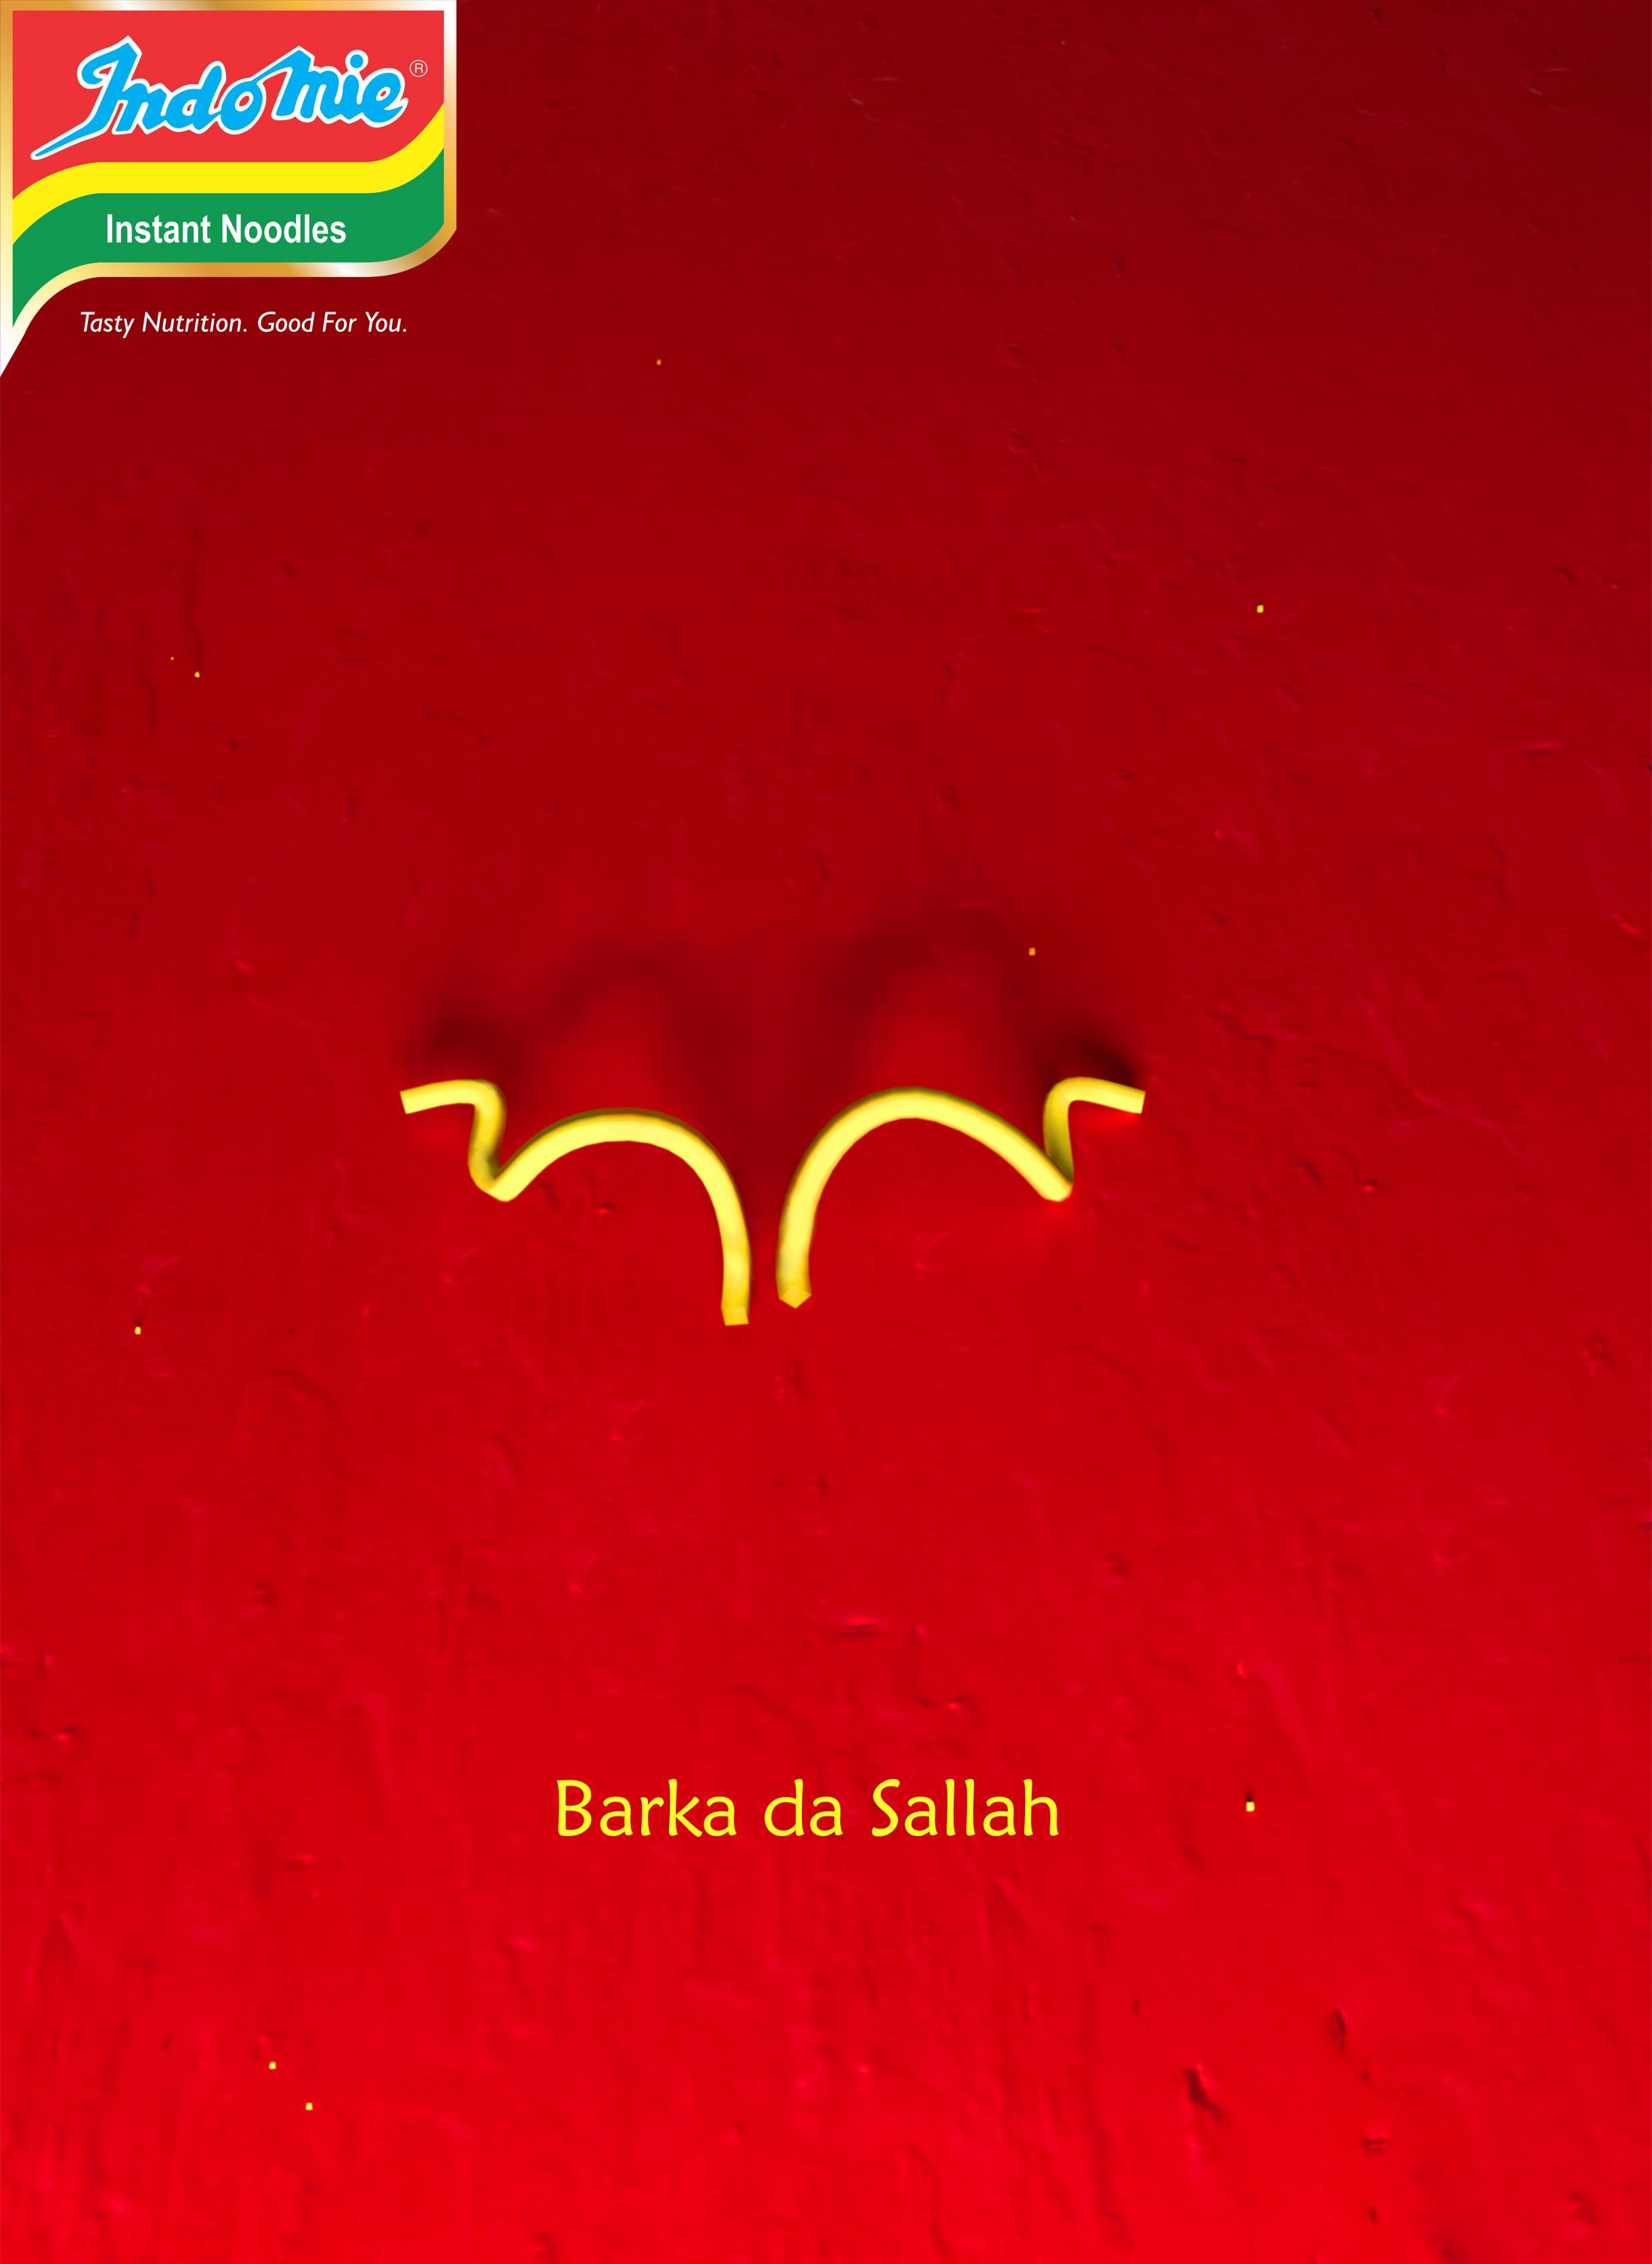 Eid Mubarak ad by Indomie Noodles